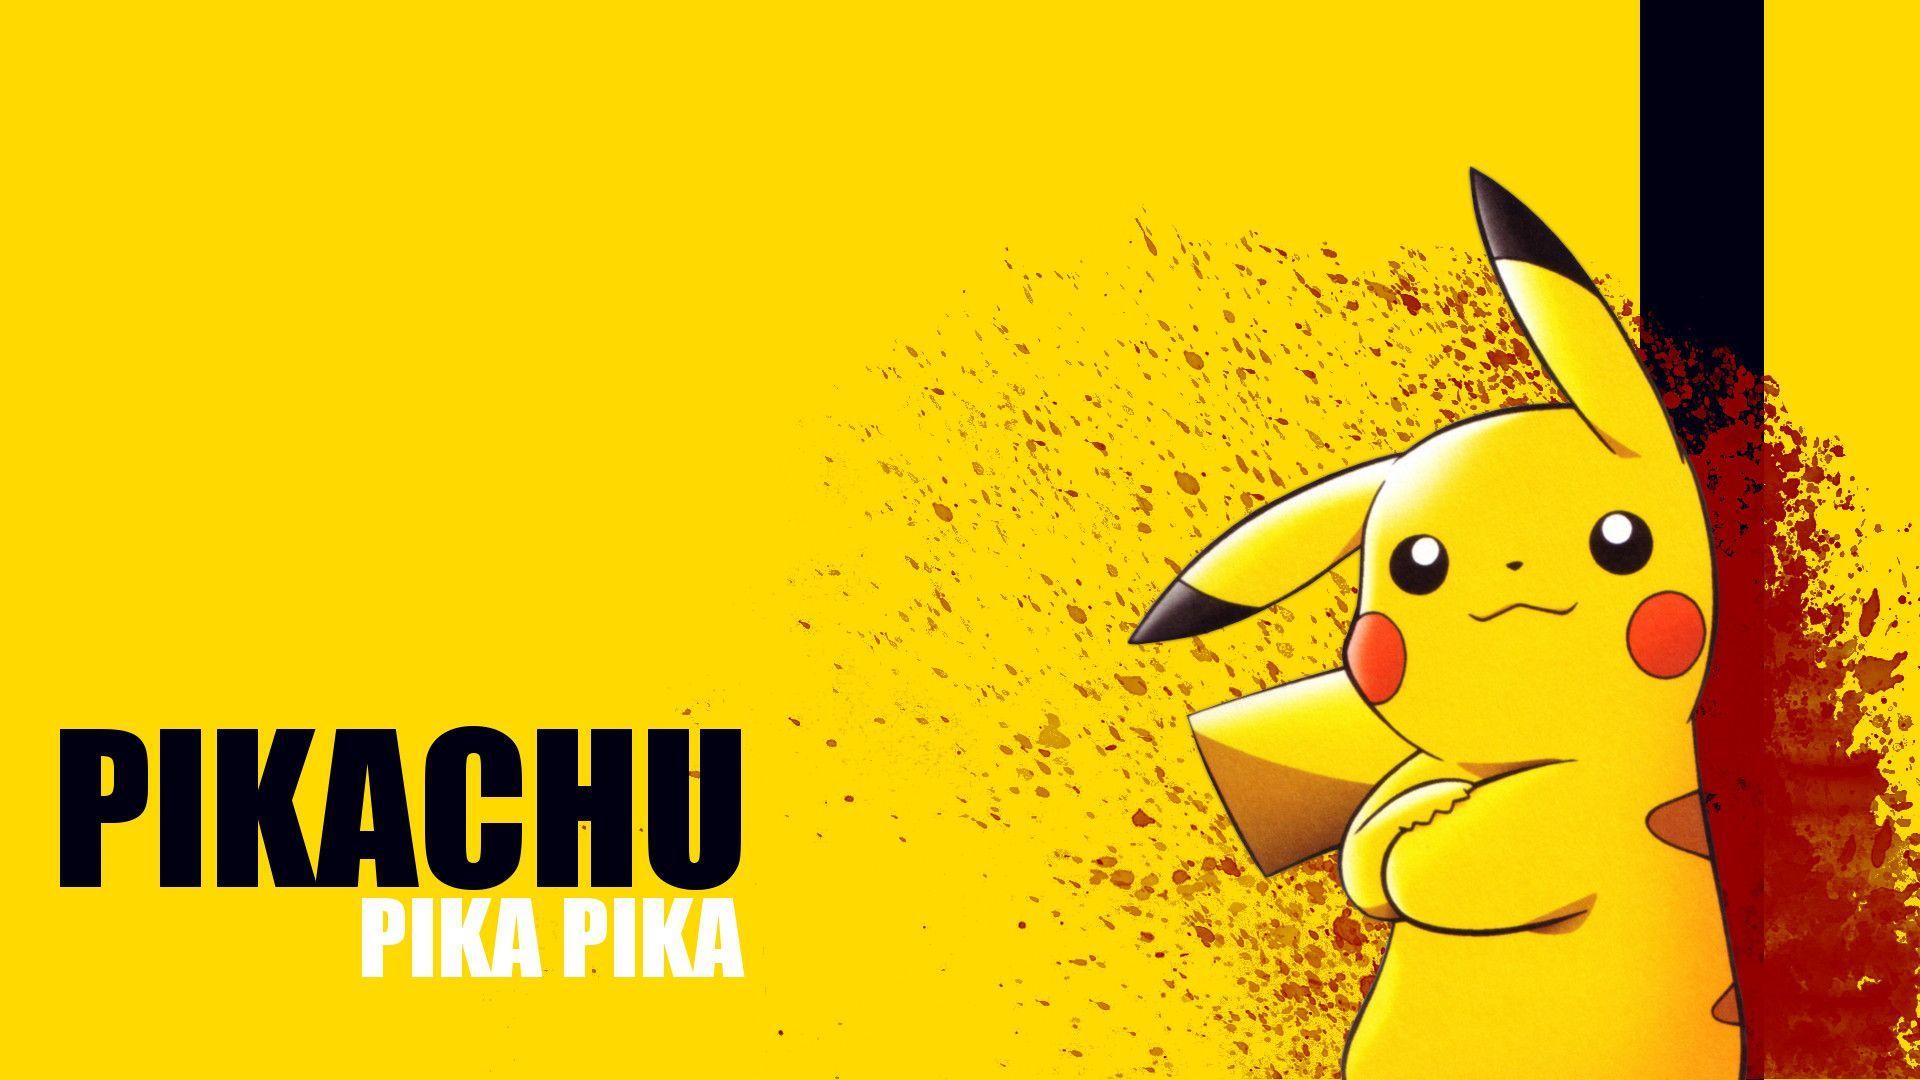 Pikachu Wallpaper for Computer. Pikachu